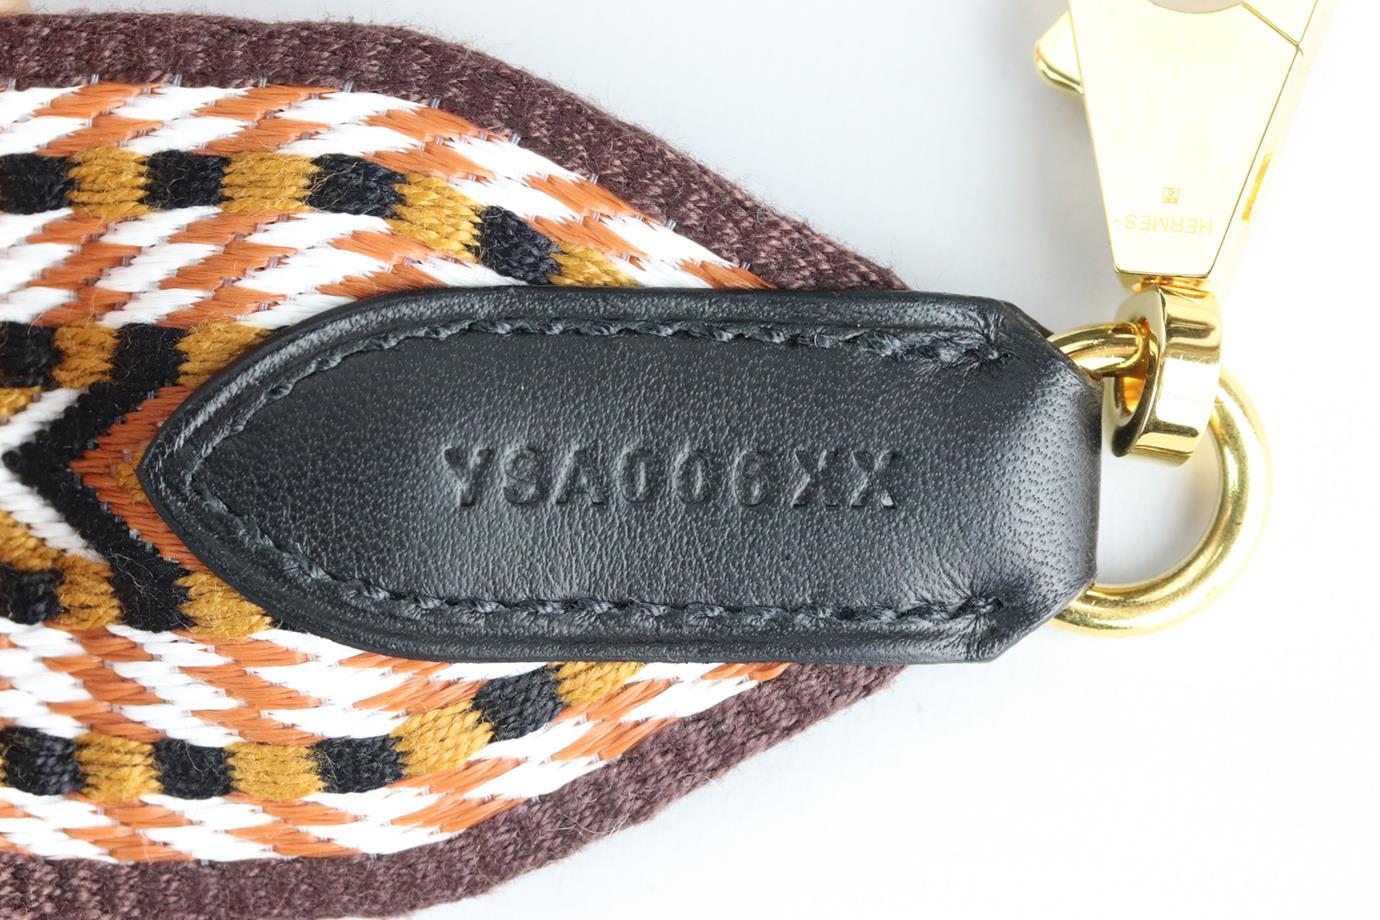 Hermès 2020 24/24 29cm Togo Leather, Alligator And Swift Leather Bag For Sale 7